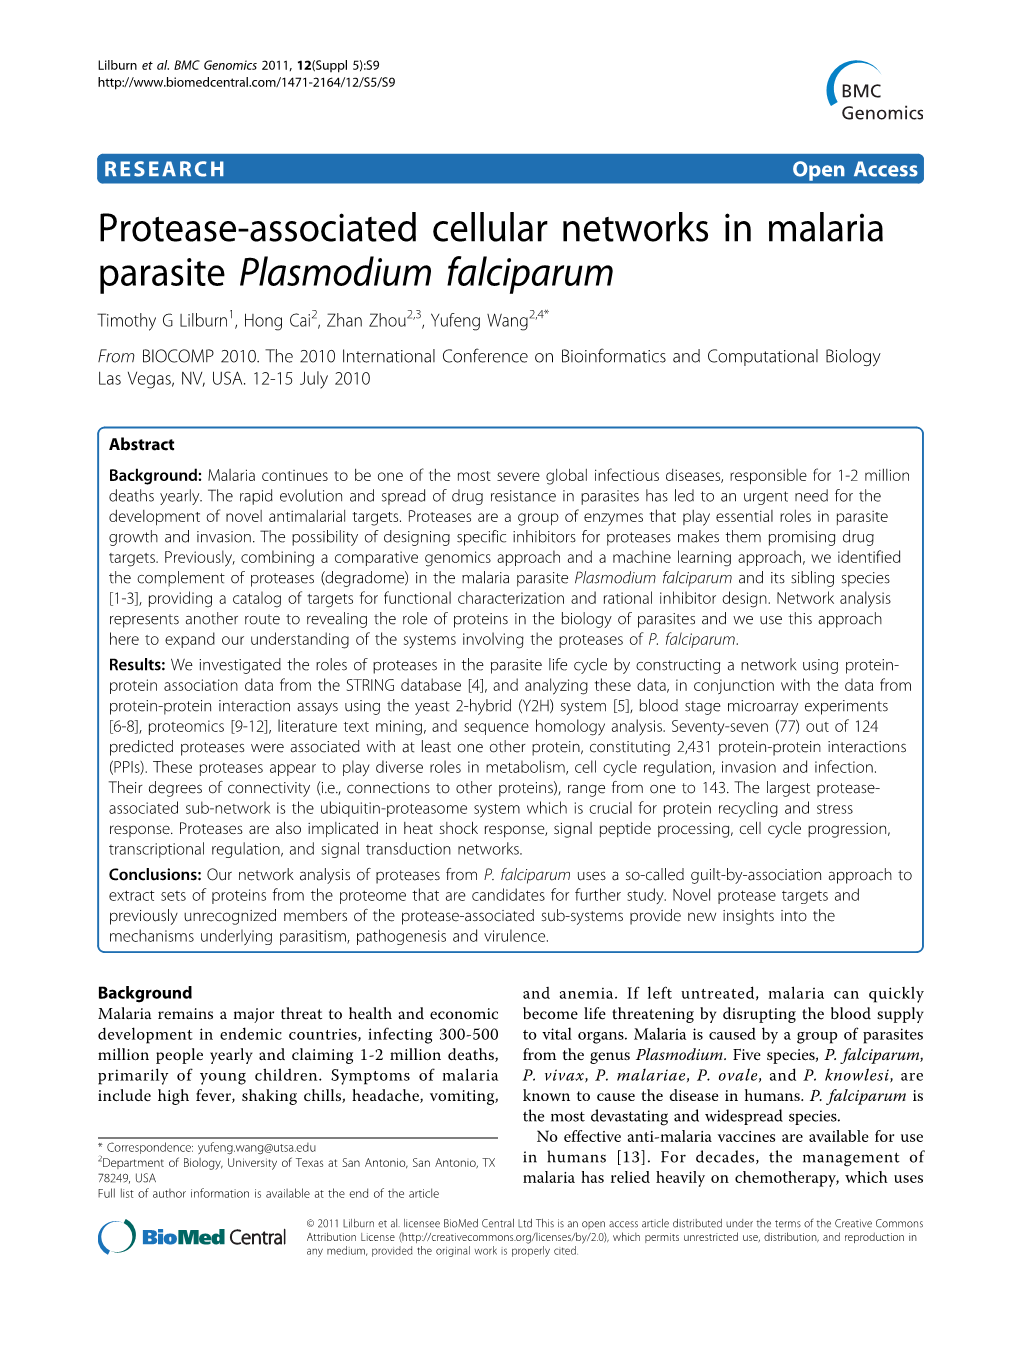 Protease-Associated Cellular Networks in Malaria Parasite Plasmodium Falciparum Timothy G Lilburn1, Hong Cai2, Zhan Zhou2,3, Yufeng Wang2,4* from BIOCOMP 2010